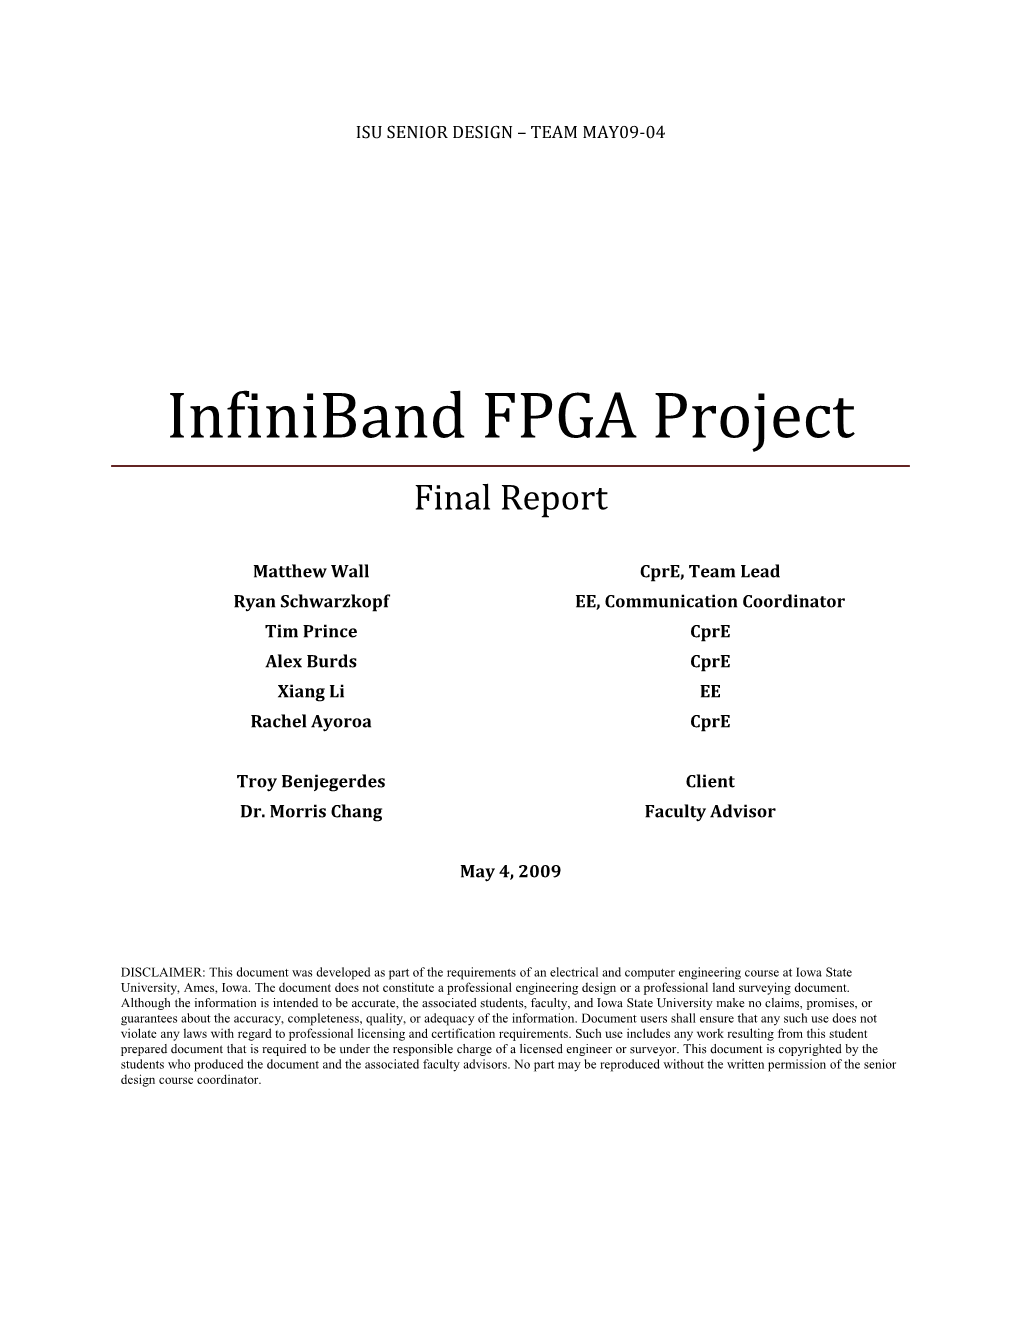 Infiniband FPGA Project